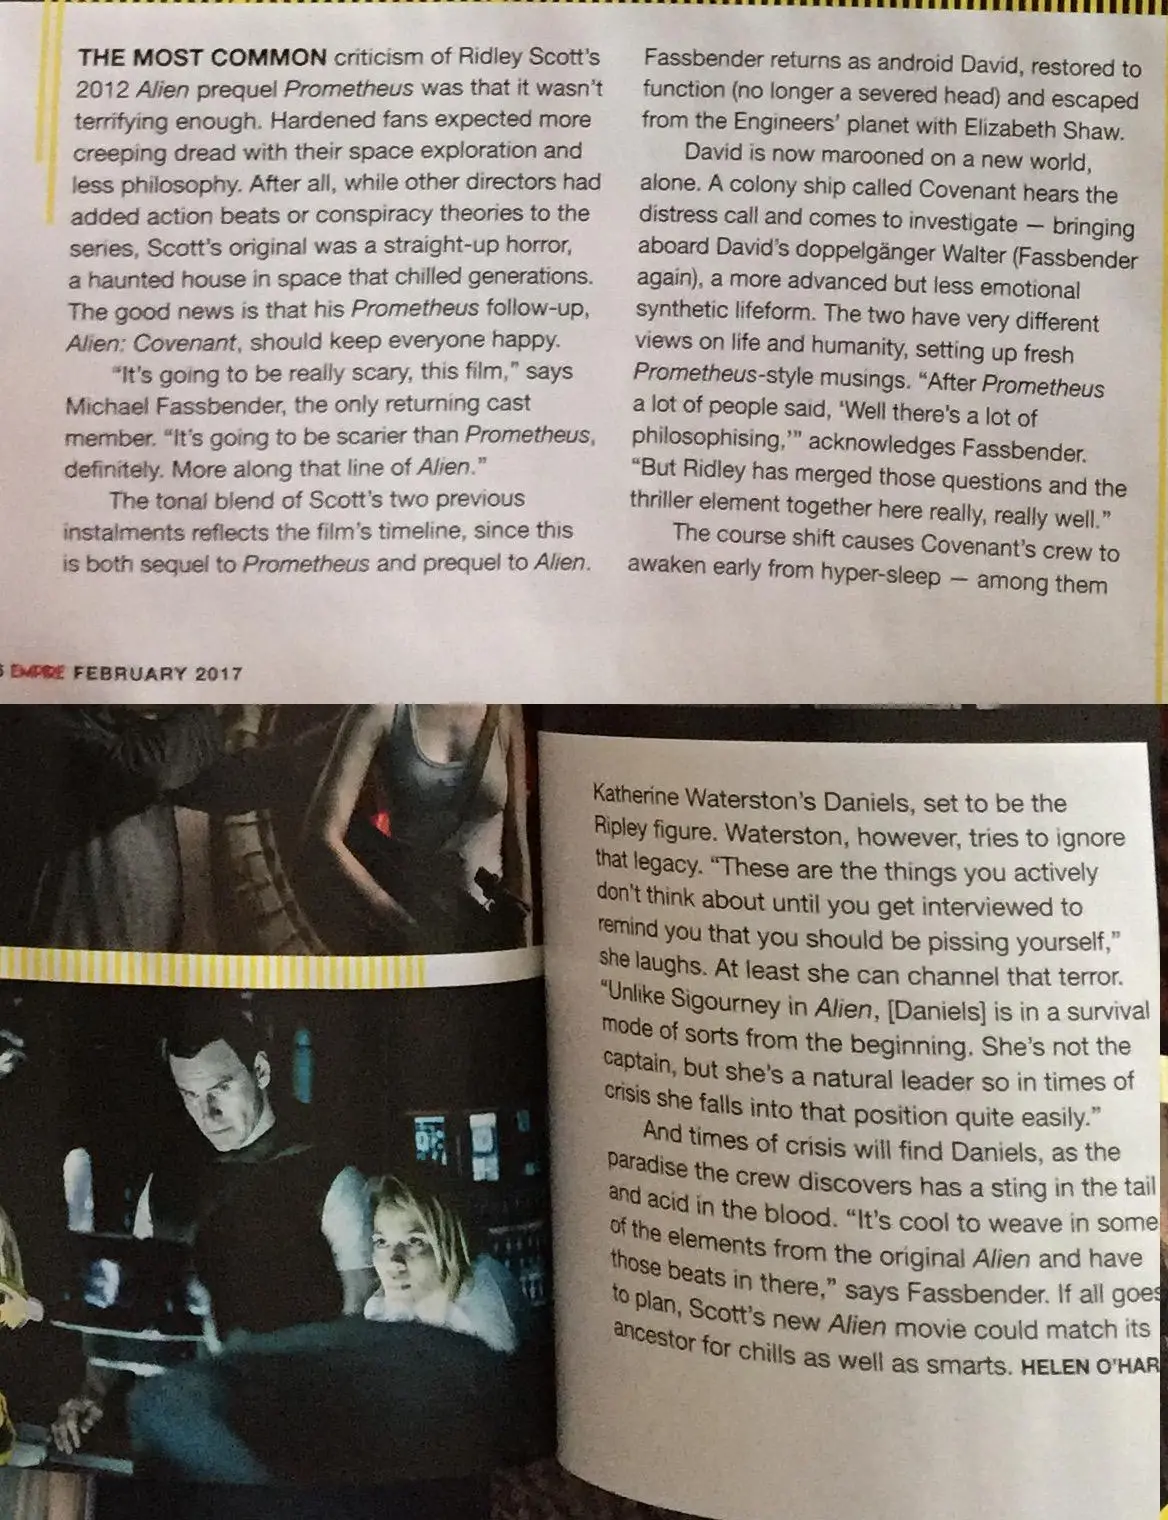 New Alien: Covenant stills featured in Empire Magazine!